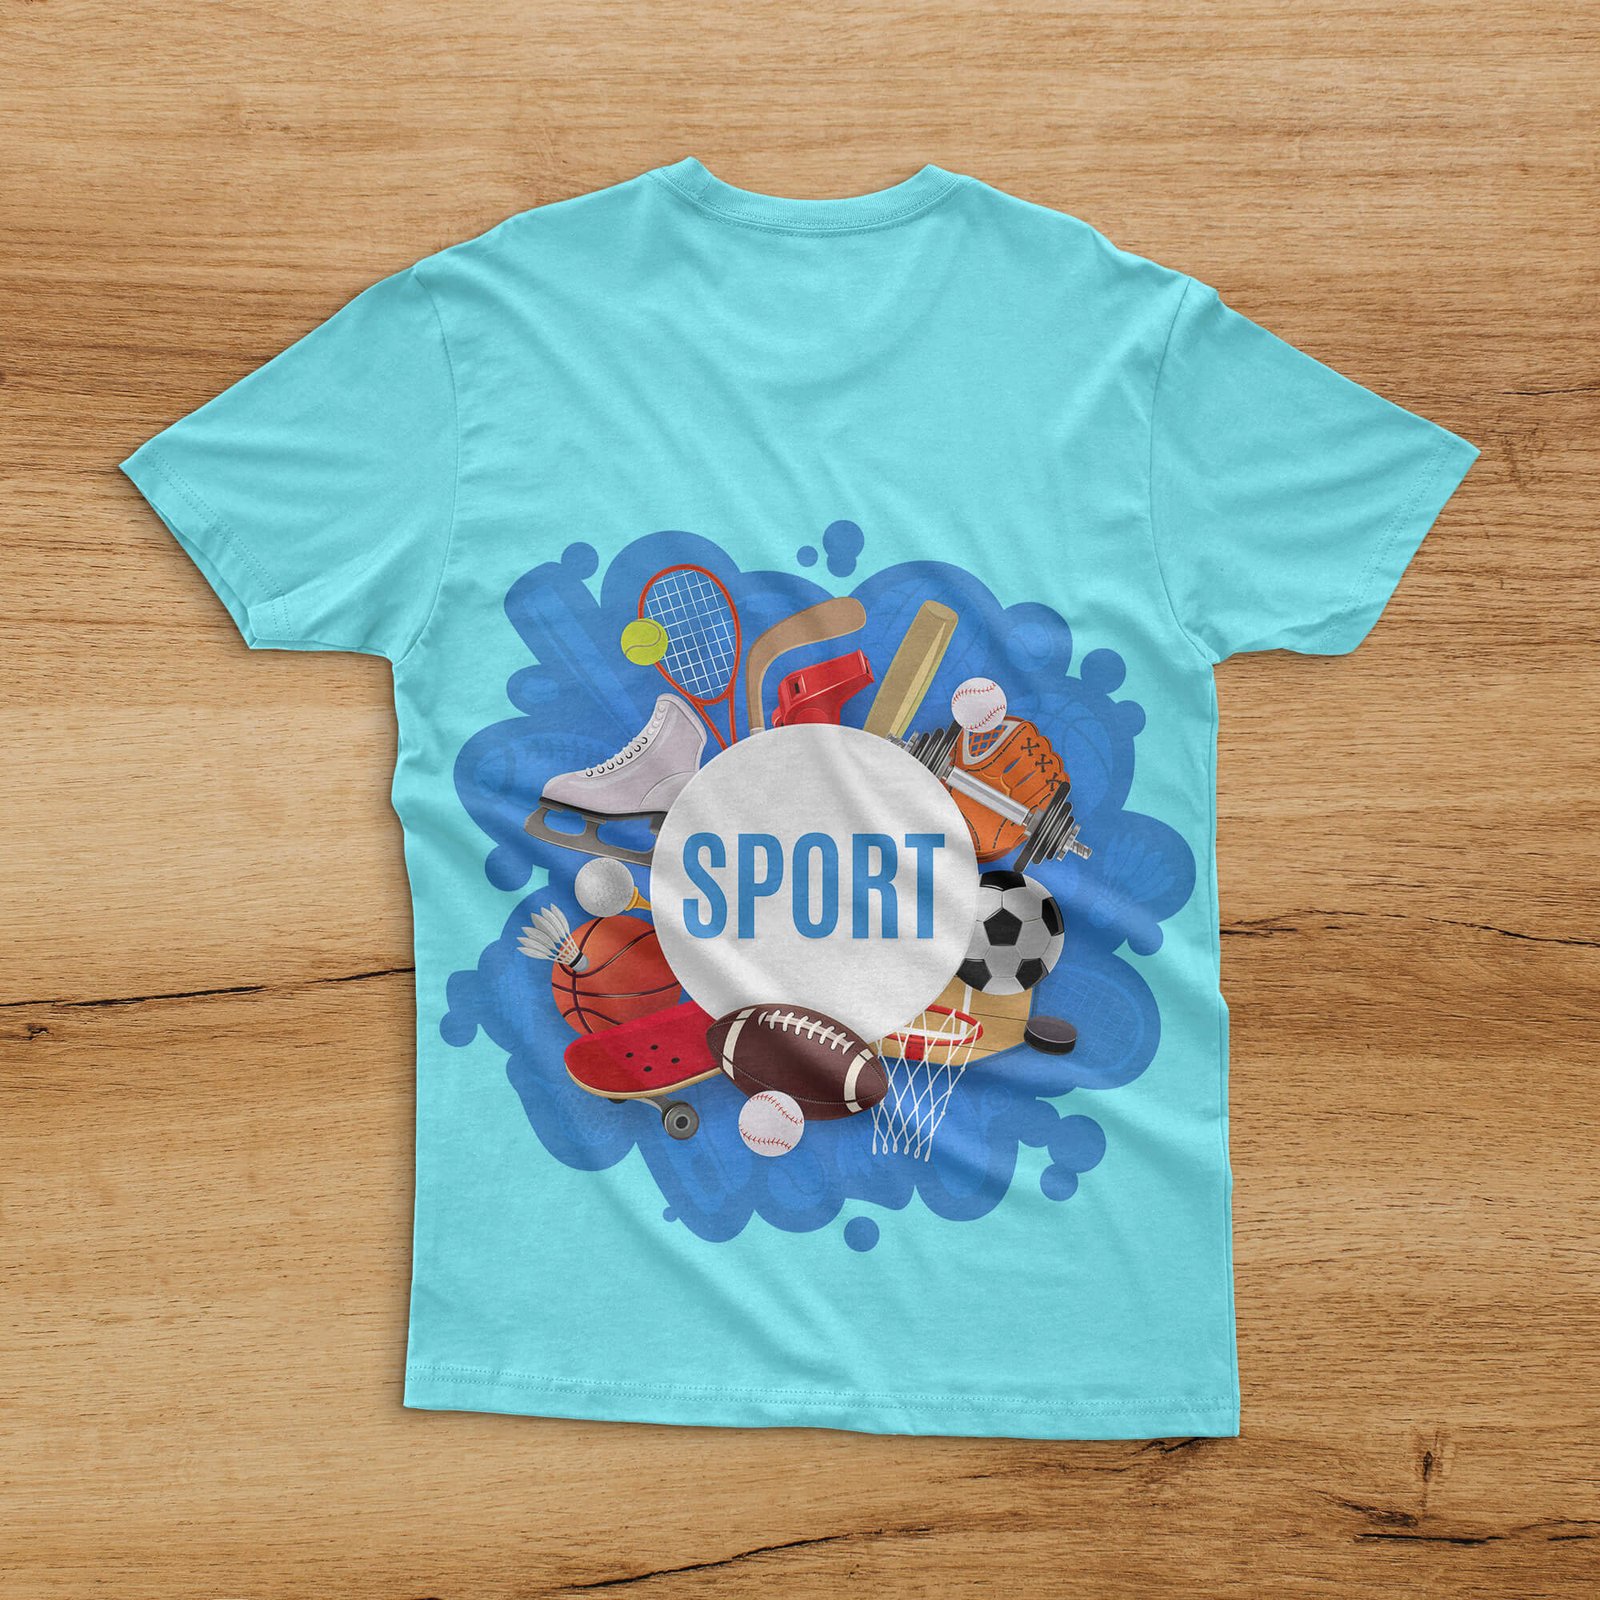 Free Kids Sports T Shirt Mockup PSD Template